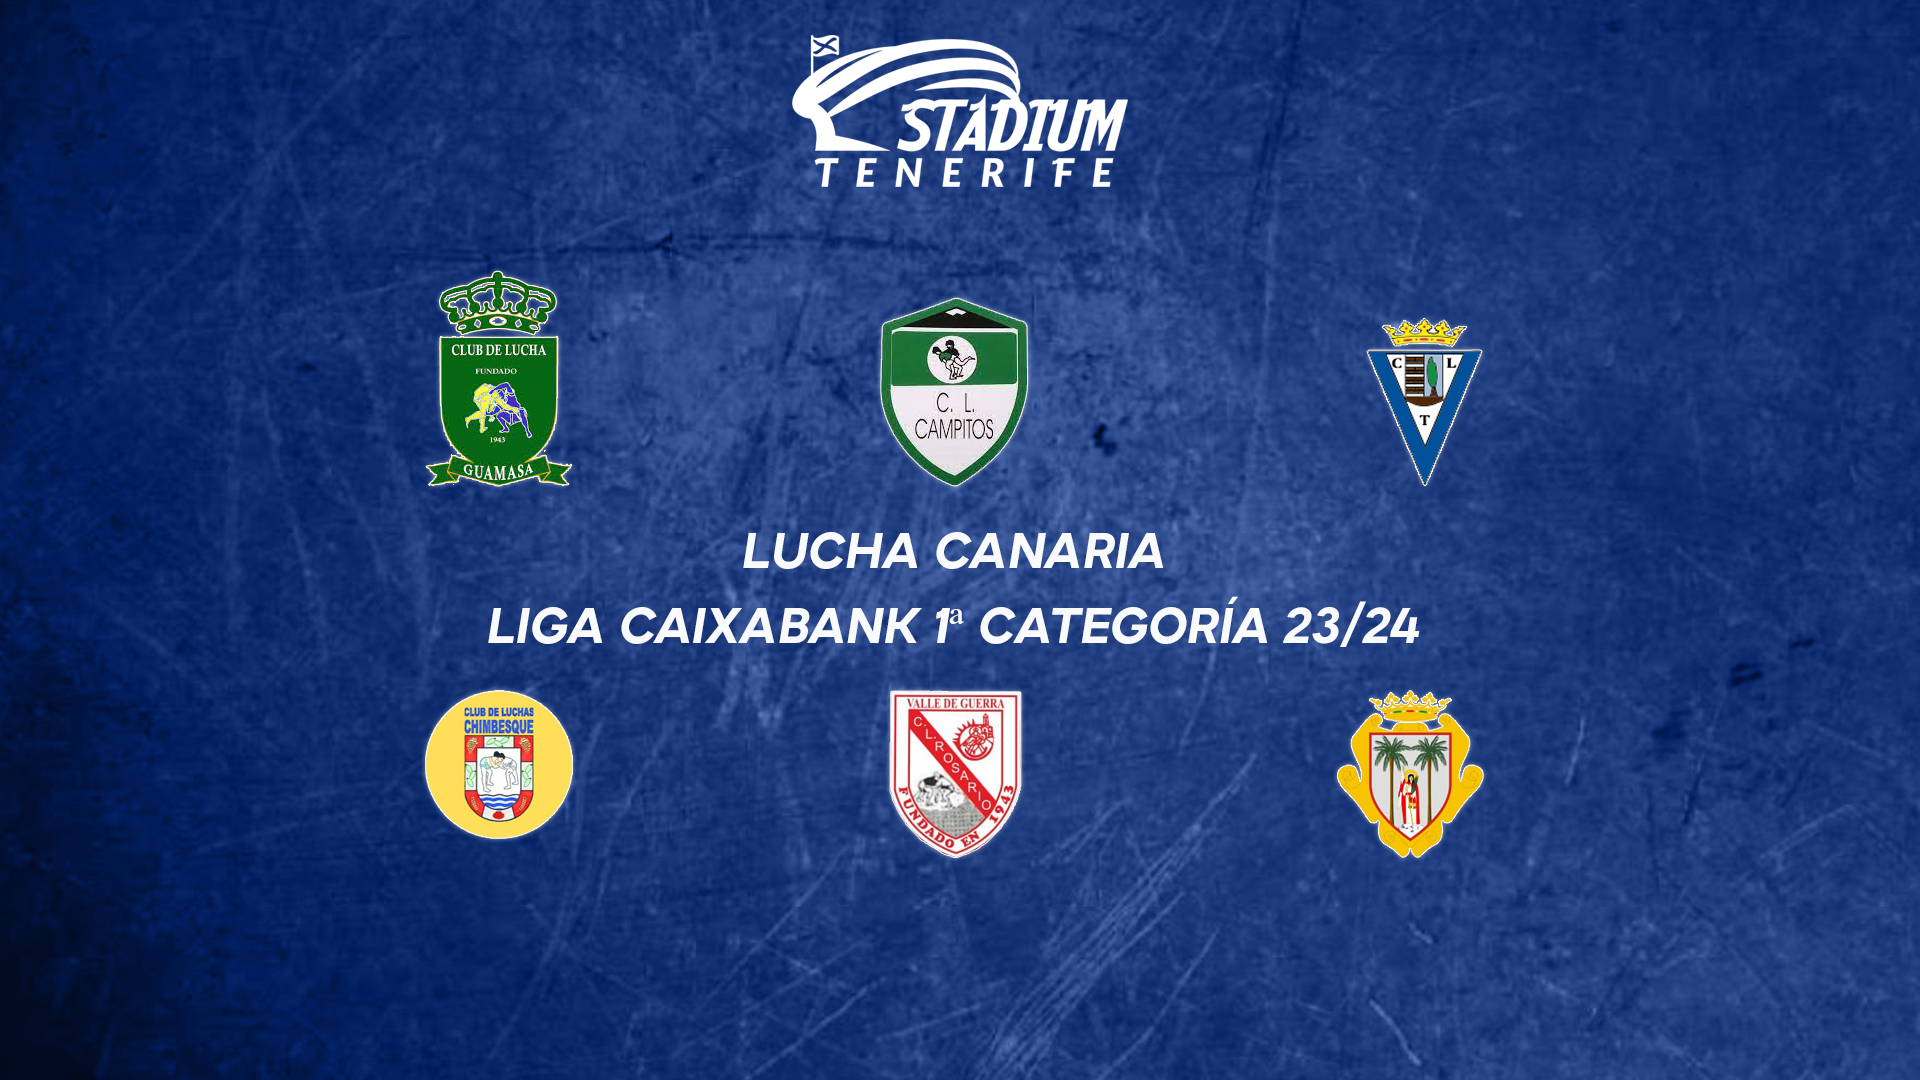 PREVIA | 7ª jornada de la Liga CaixaBank de Lucha Canaria (15,16 y 17 de diciembre)